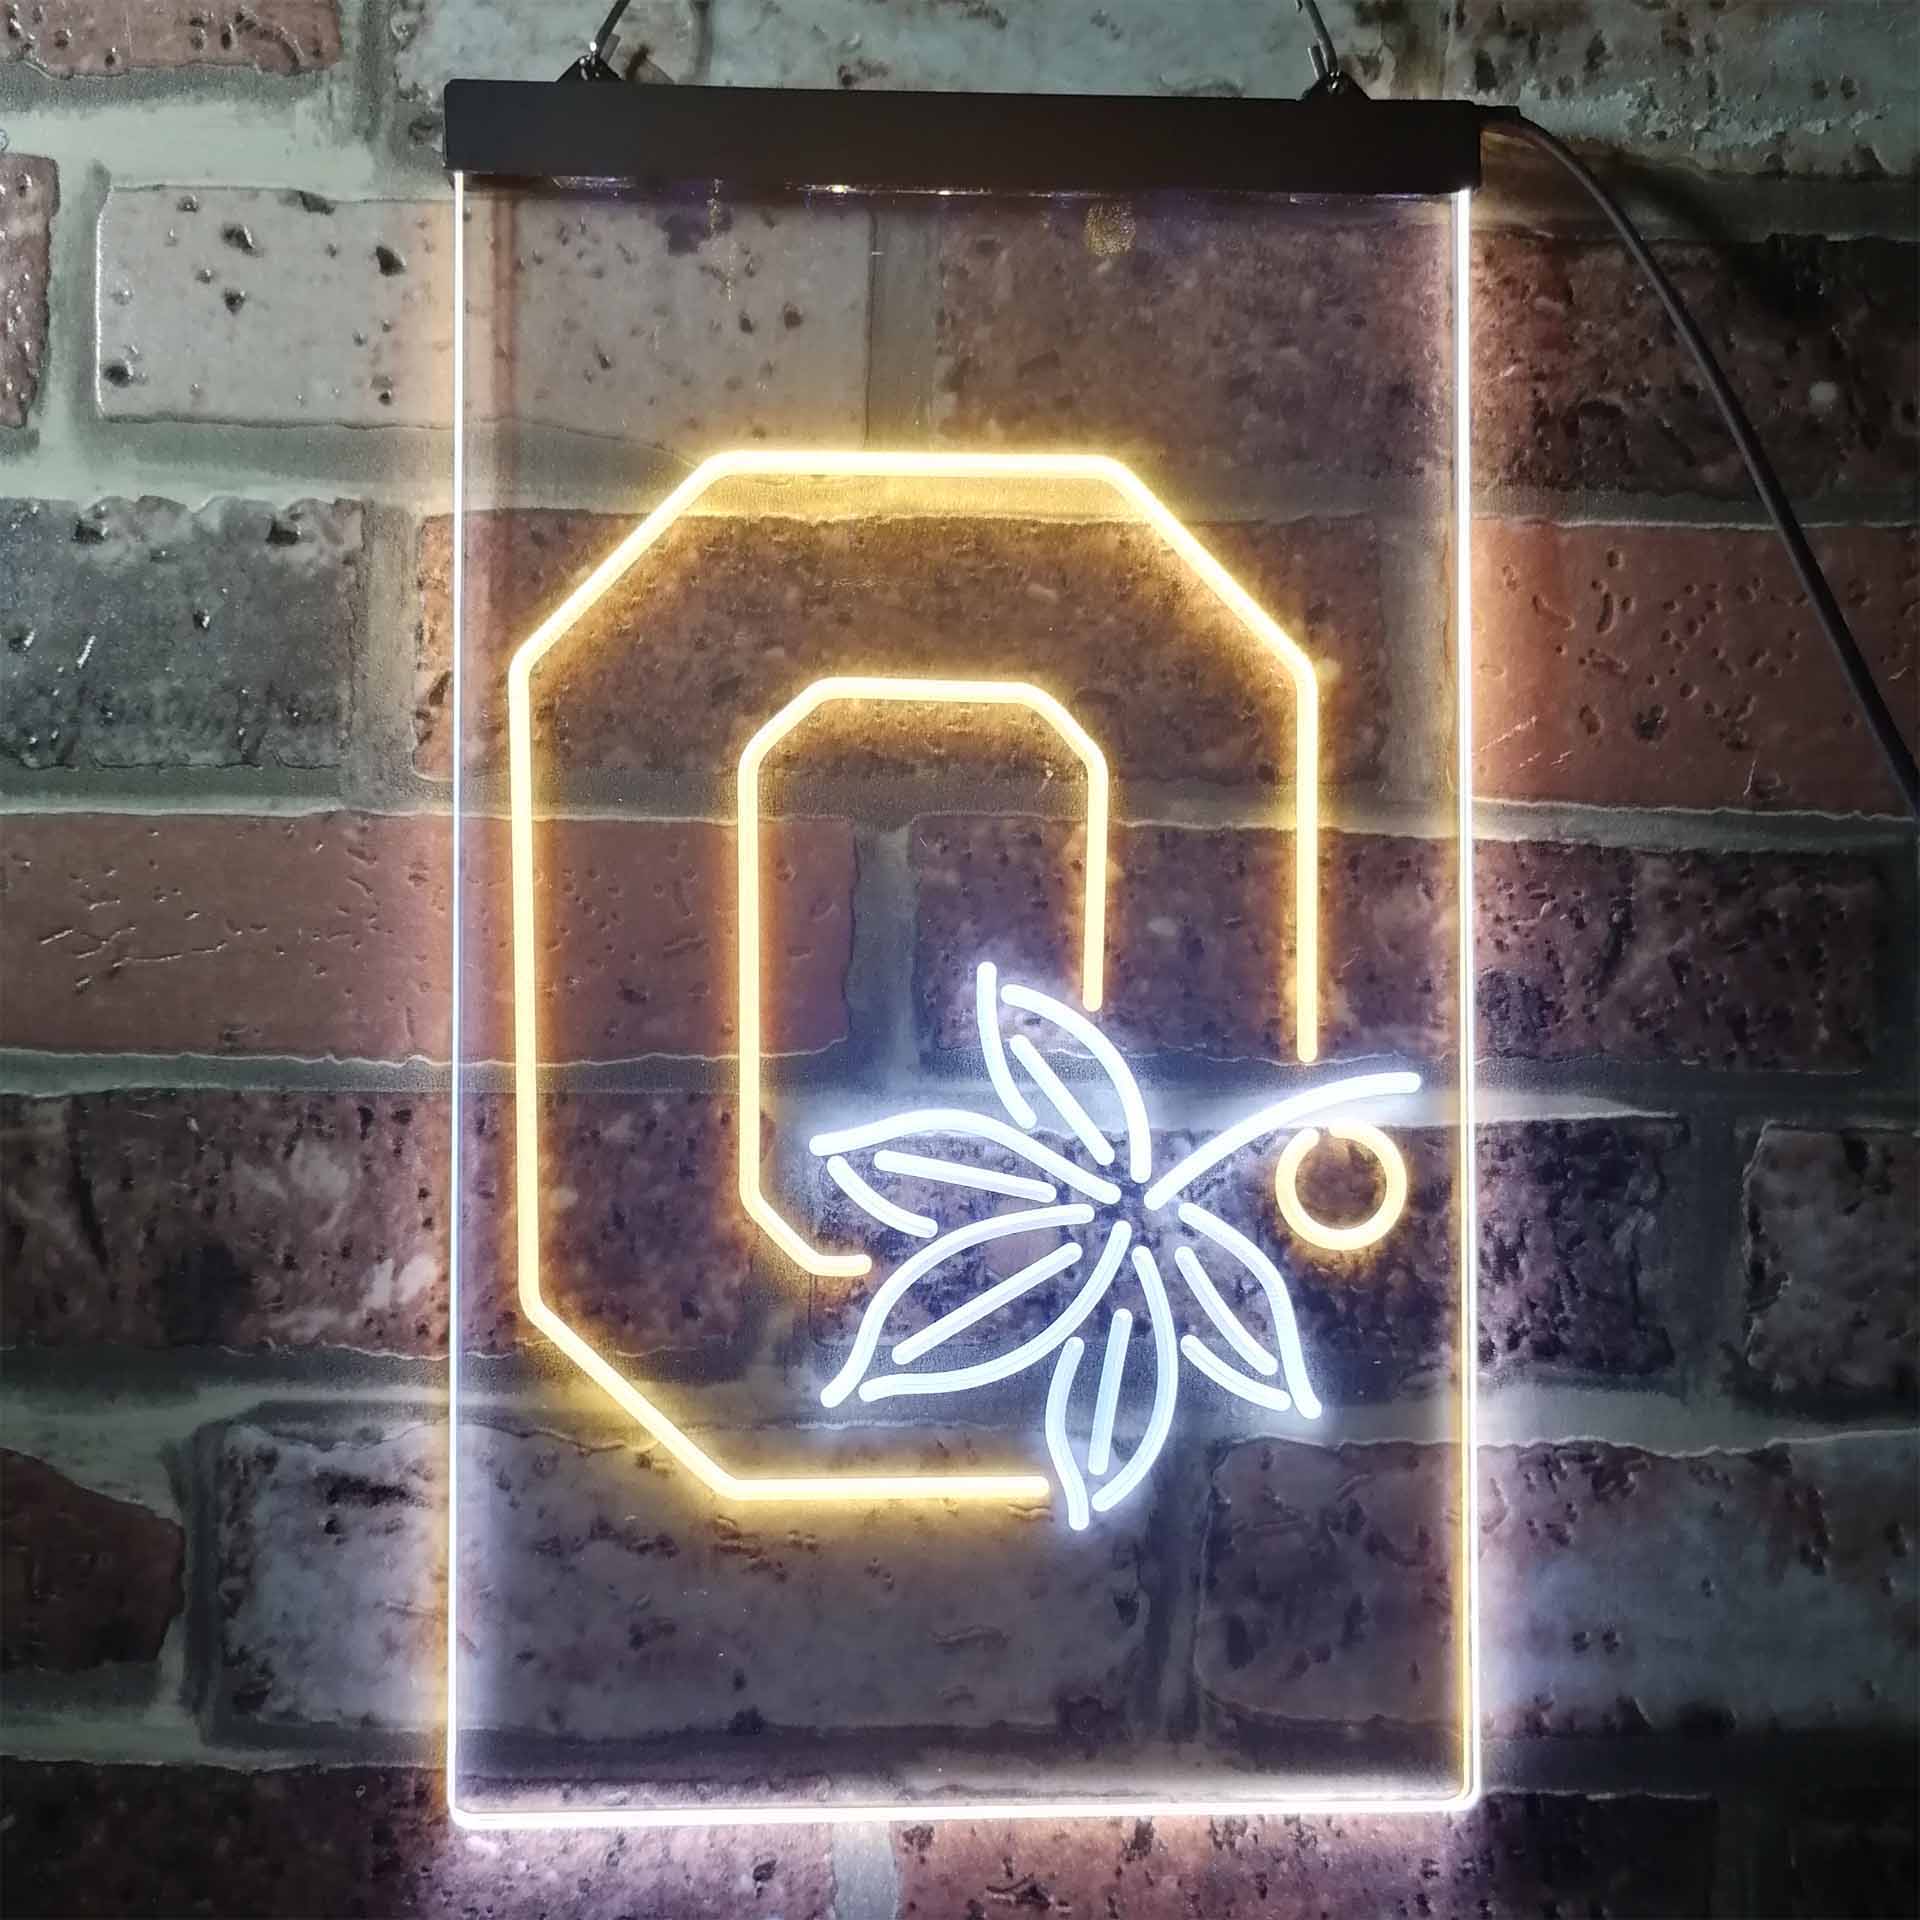 Ohio State Buckeyes Leaf Neon-Like LED Sign - ProLedSign